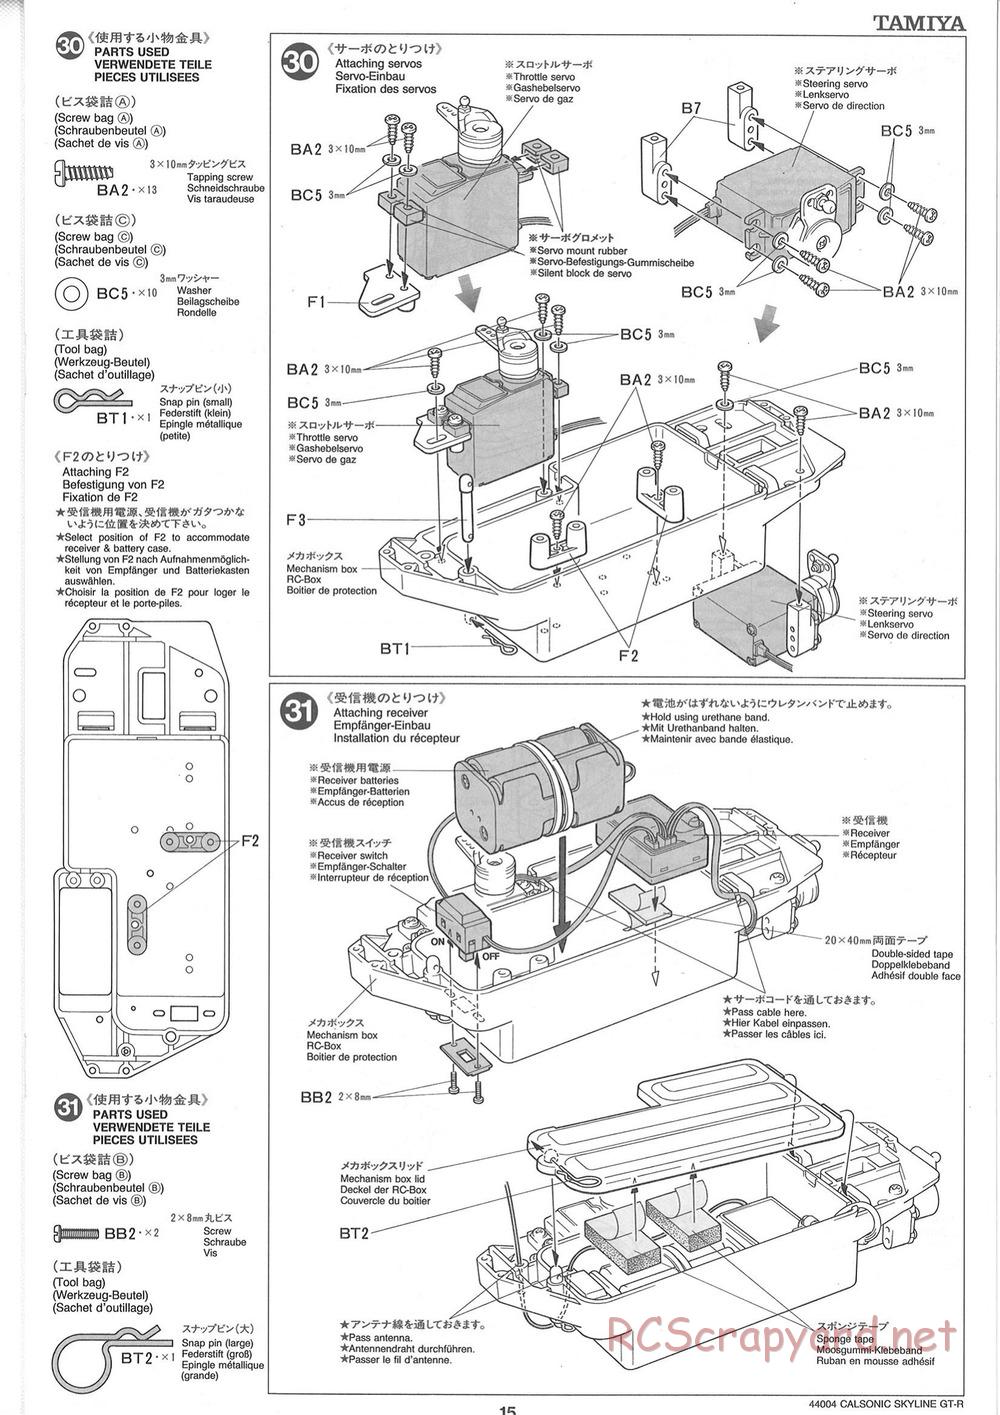 Tamiya - Calsonic GT-R - TGX Mk.1 Chassis - Manual - Page 15